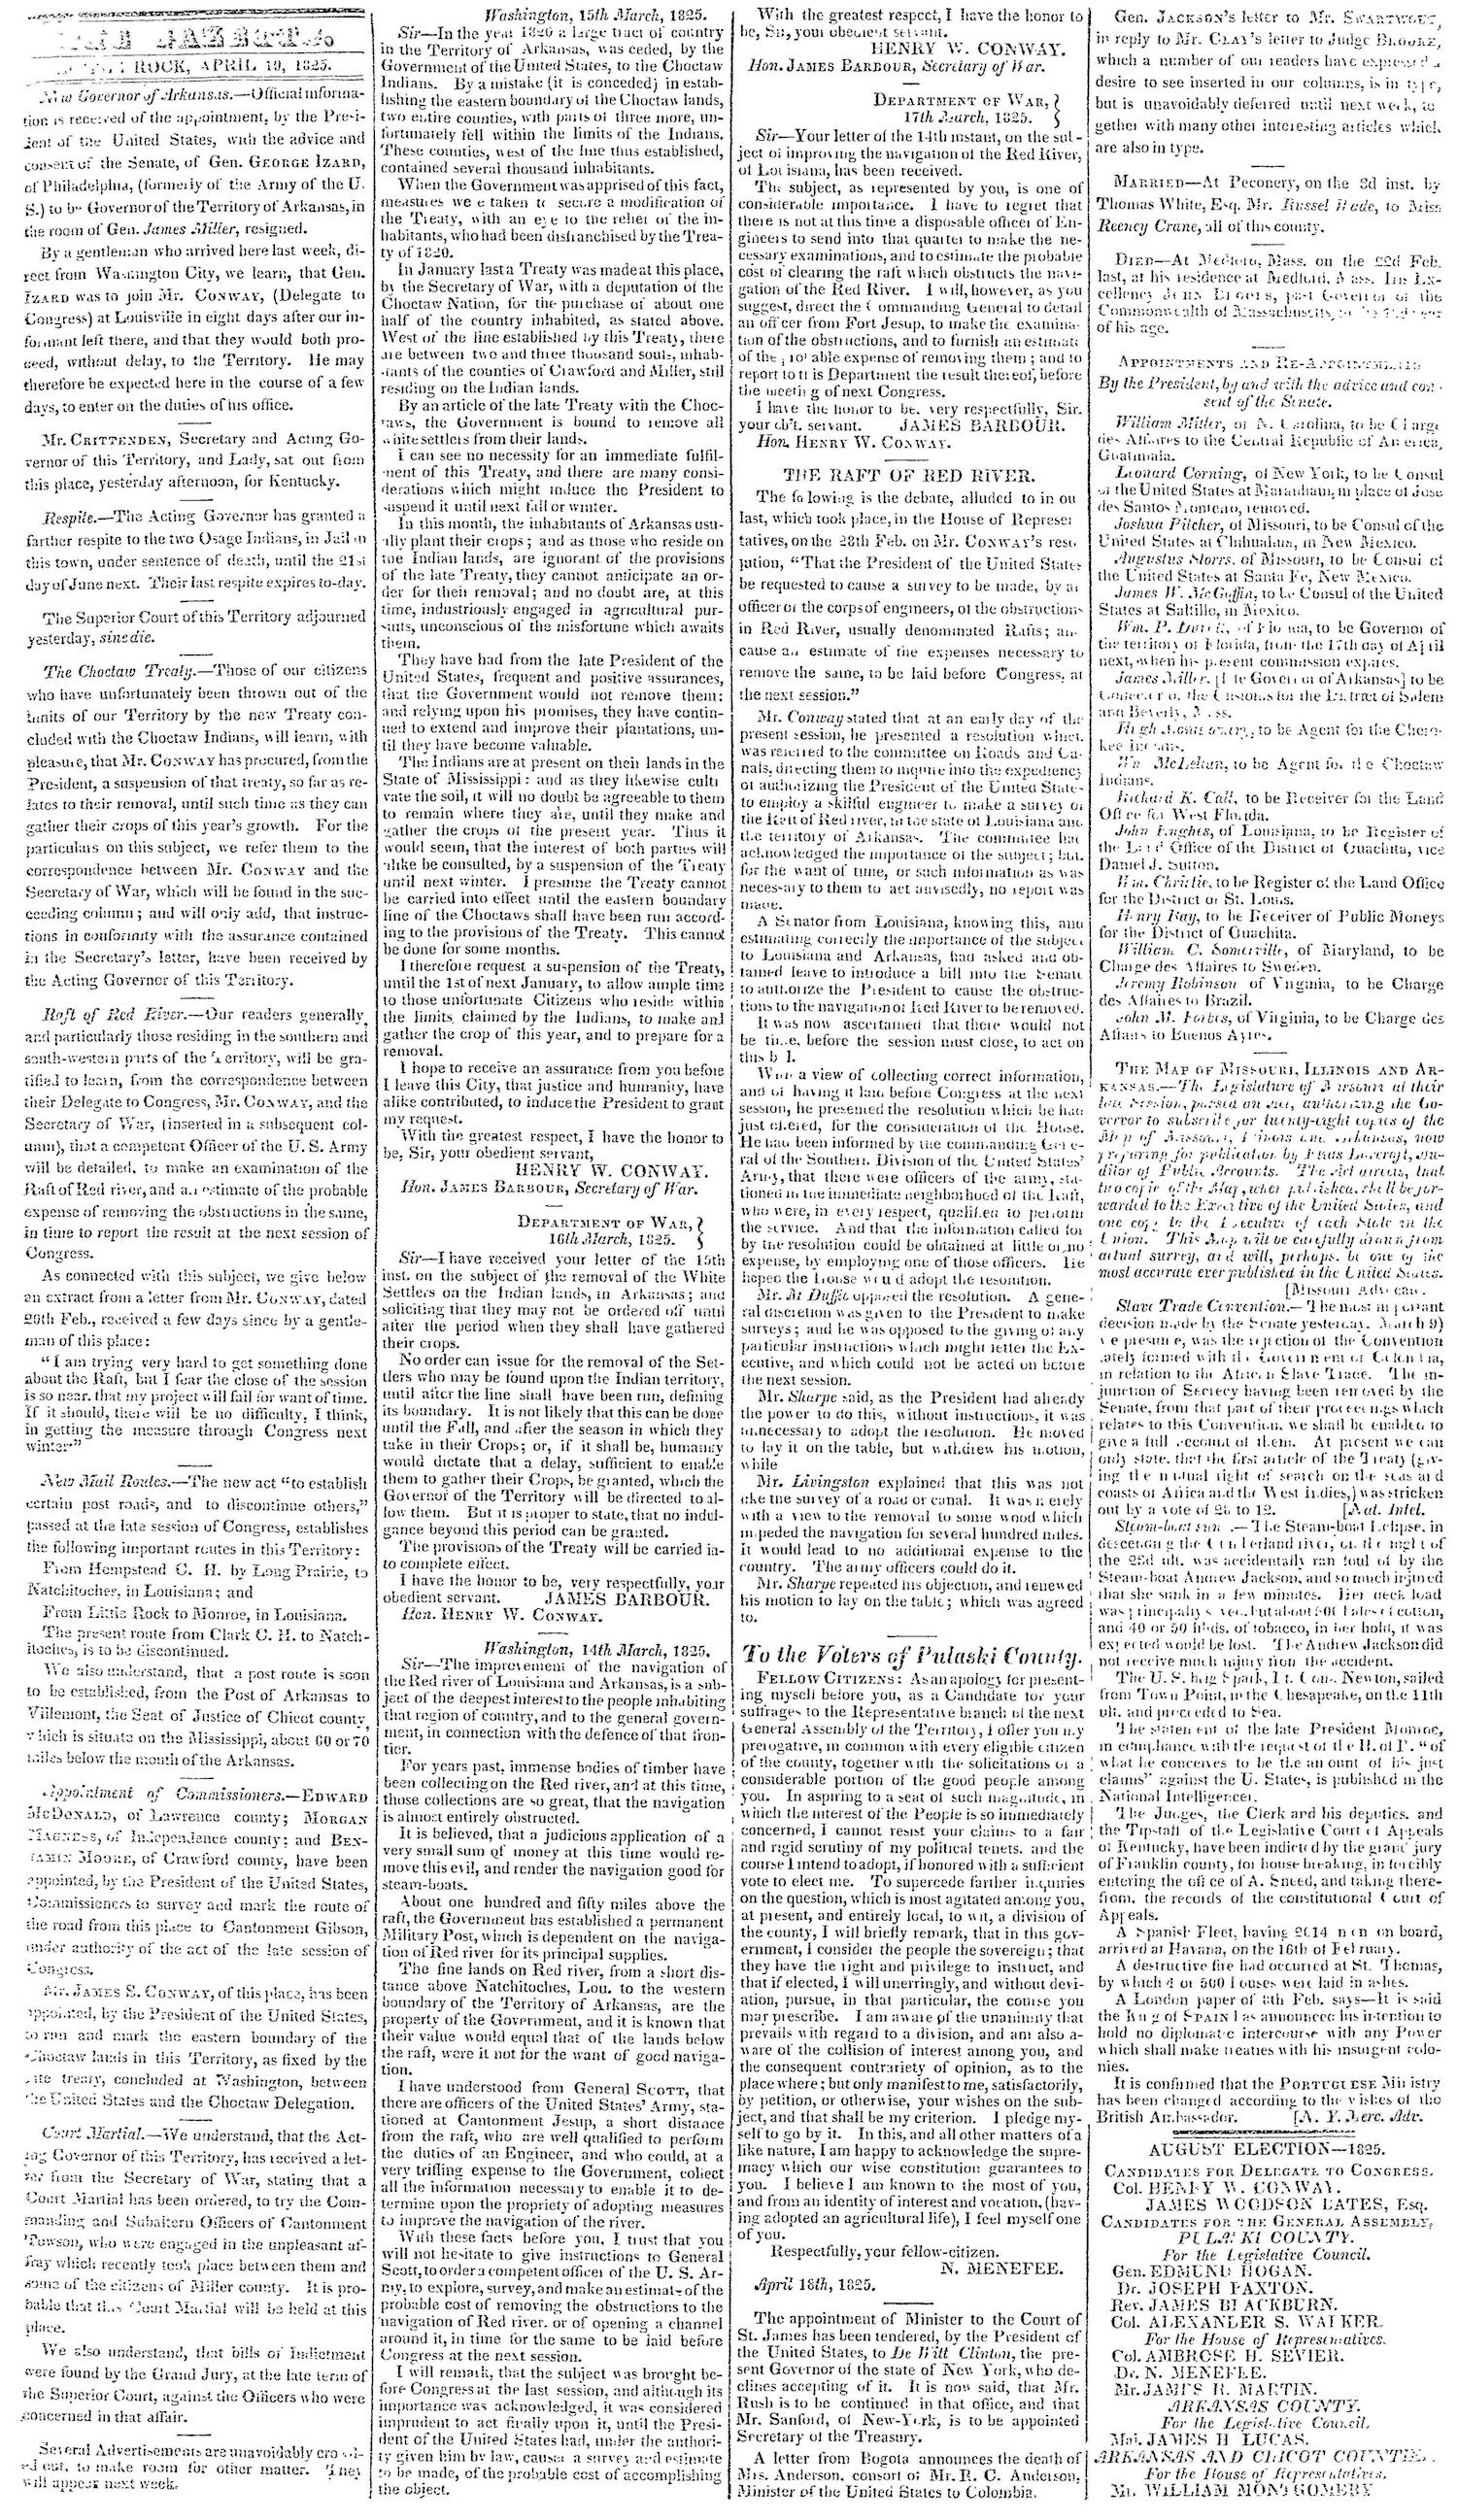 Celebrating 200 years: 1823 Arkansas Gazette | The Arkansas Democrat ...